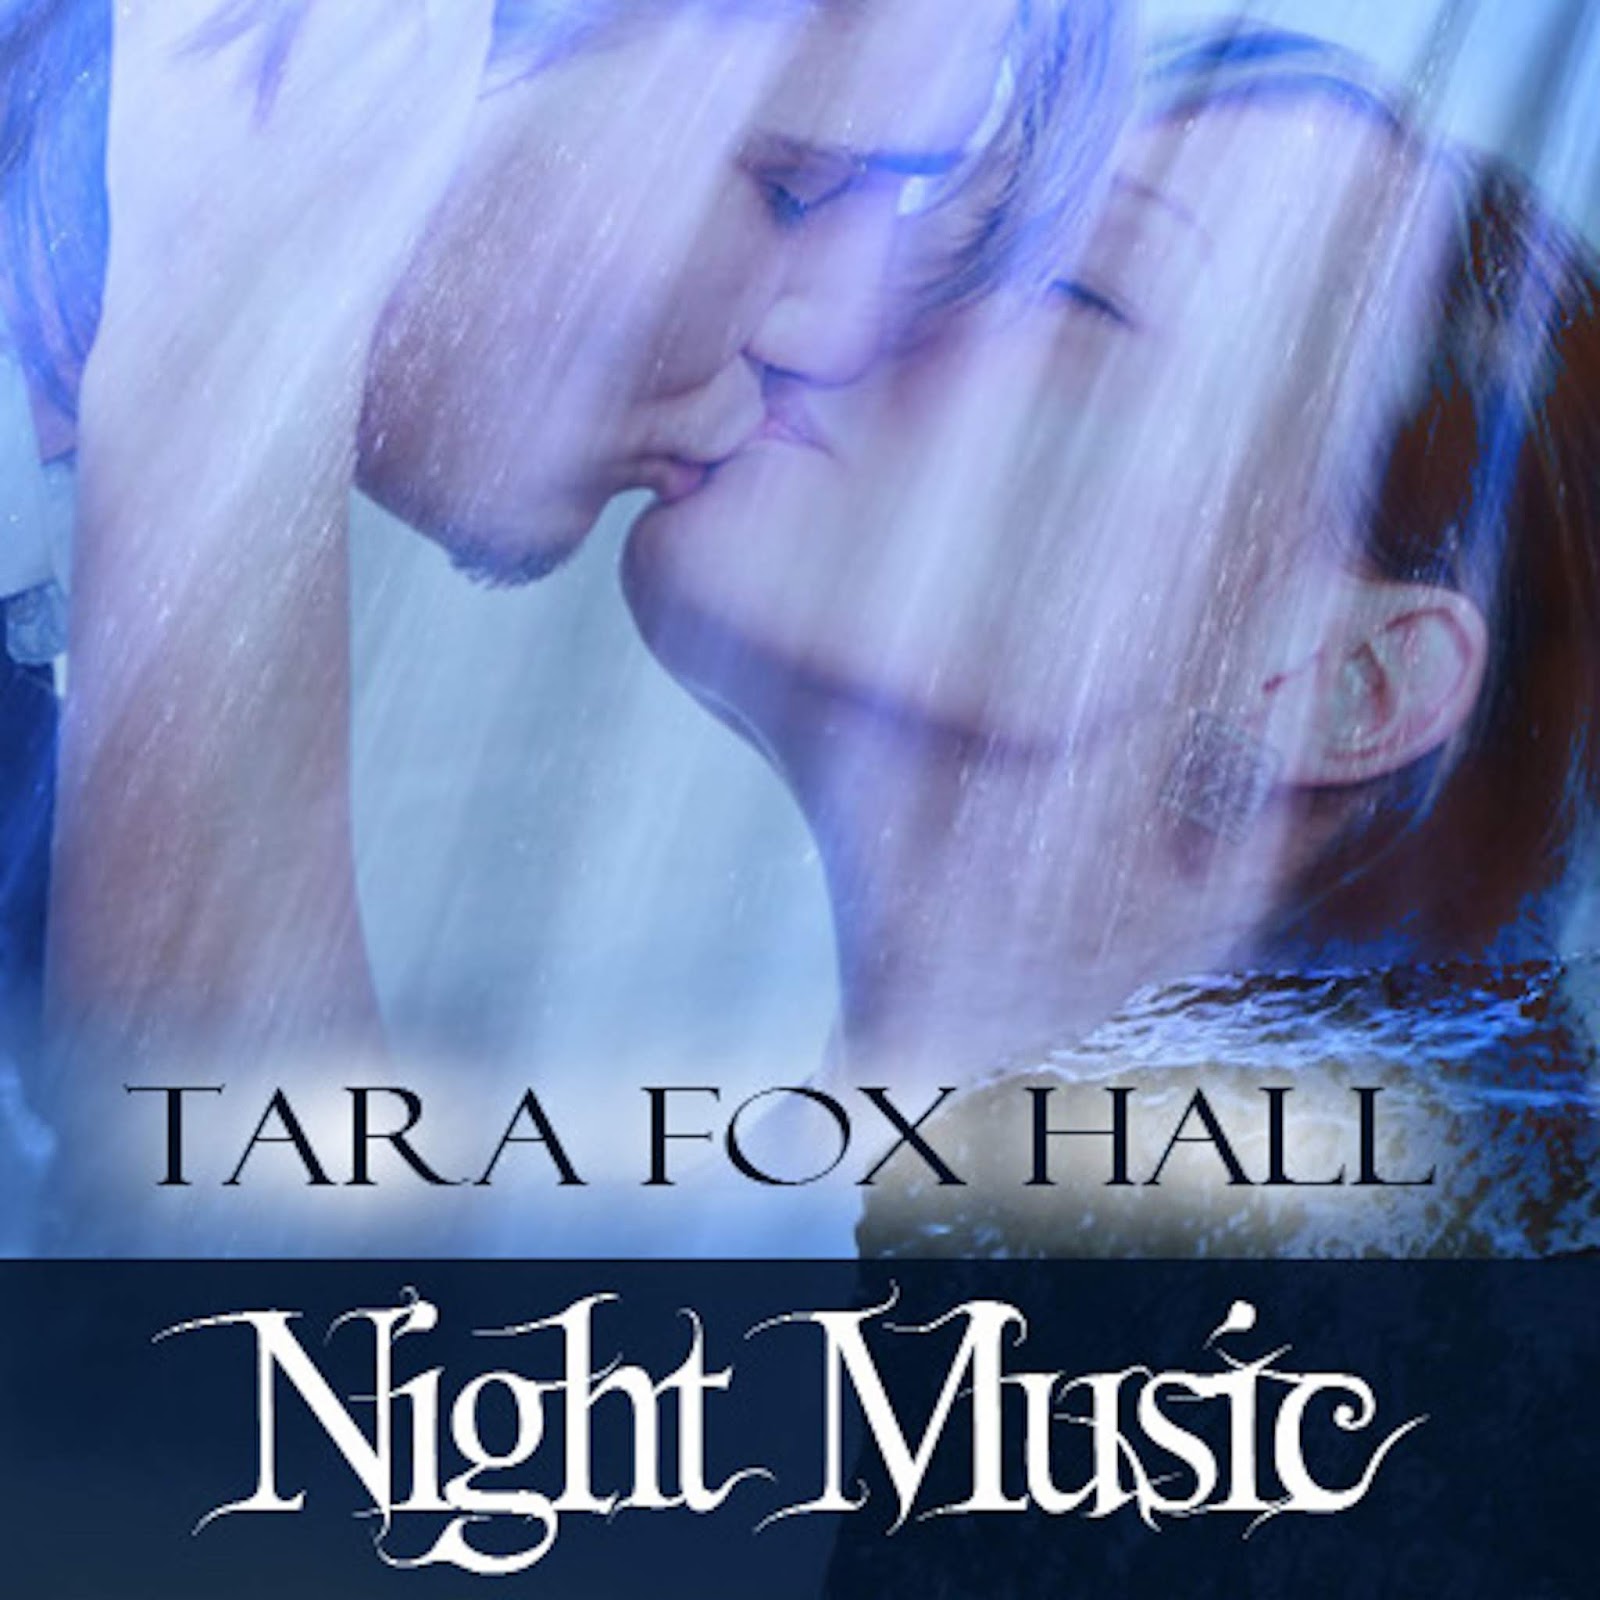 Tara fox. Night Music.